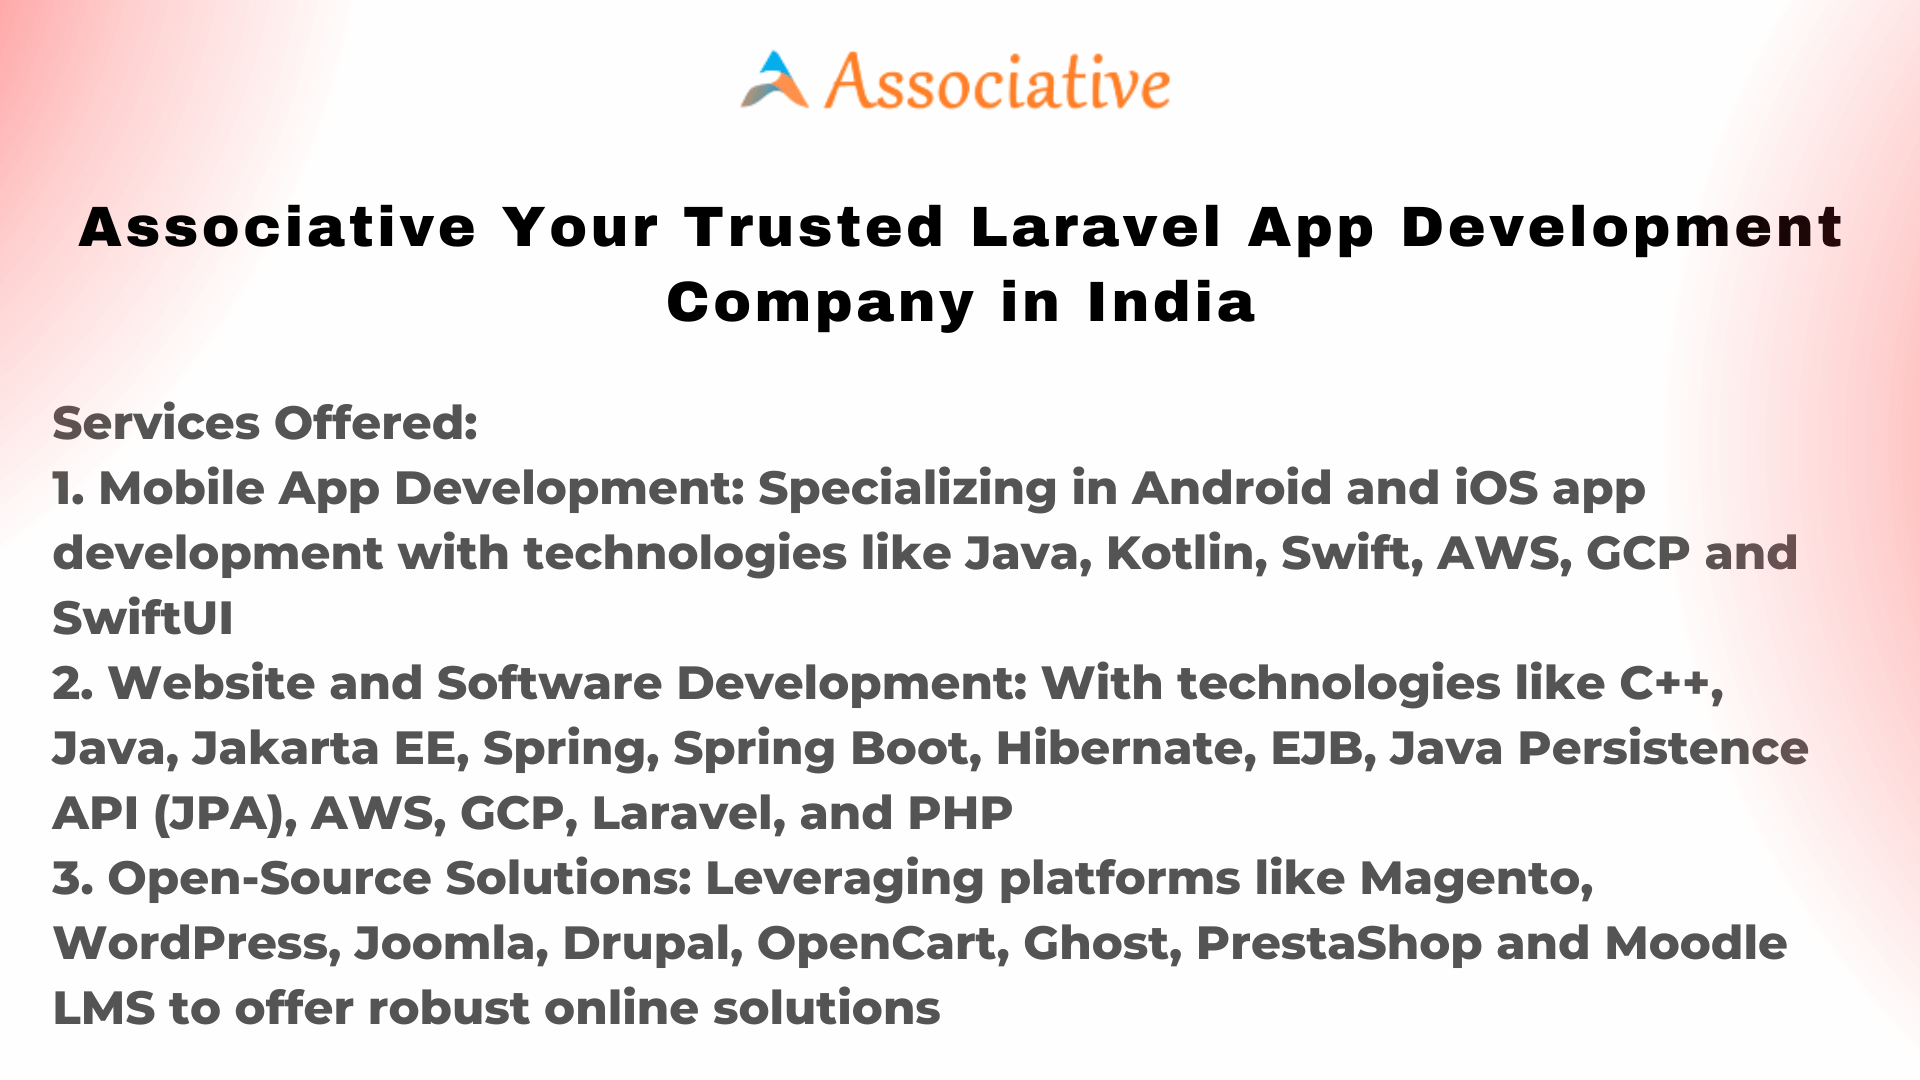 Associative Your Trusted Laravel App Development Company in India